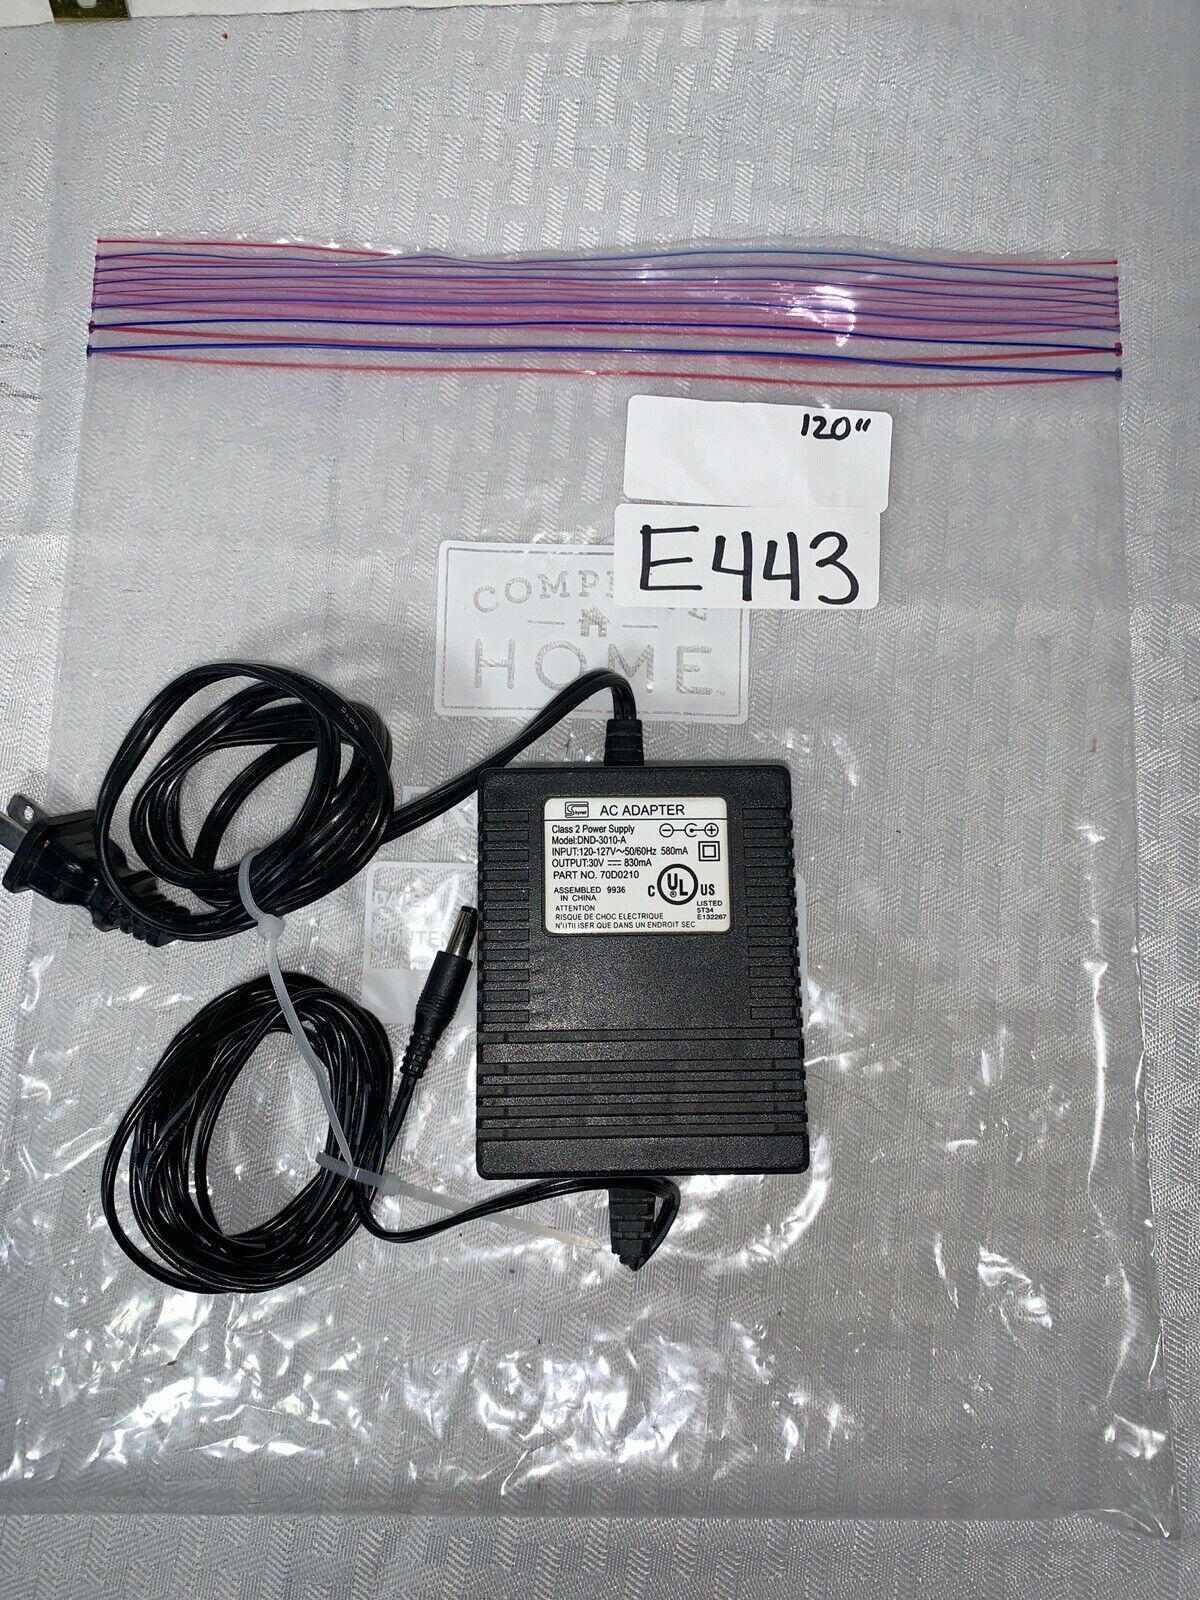 Skynet Model DND-3010-A AC Adapter Output DC 30V 830mA black Type: AC/DC Adapter Brand: Skynet UPC: Does not appl